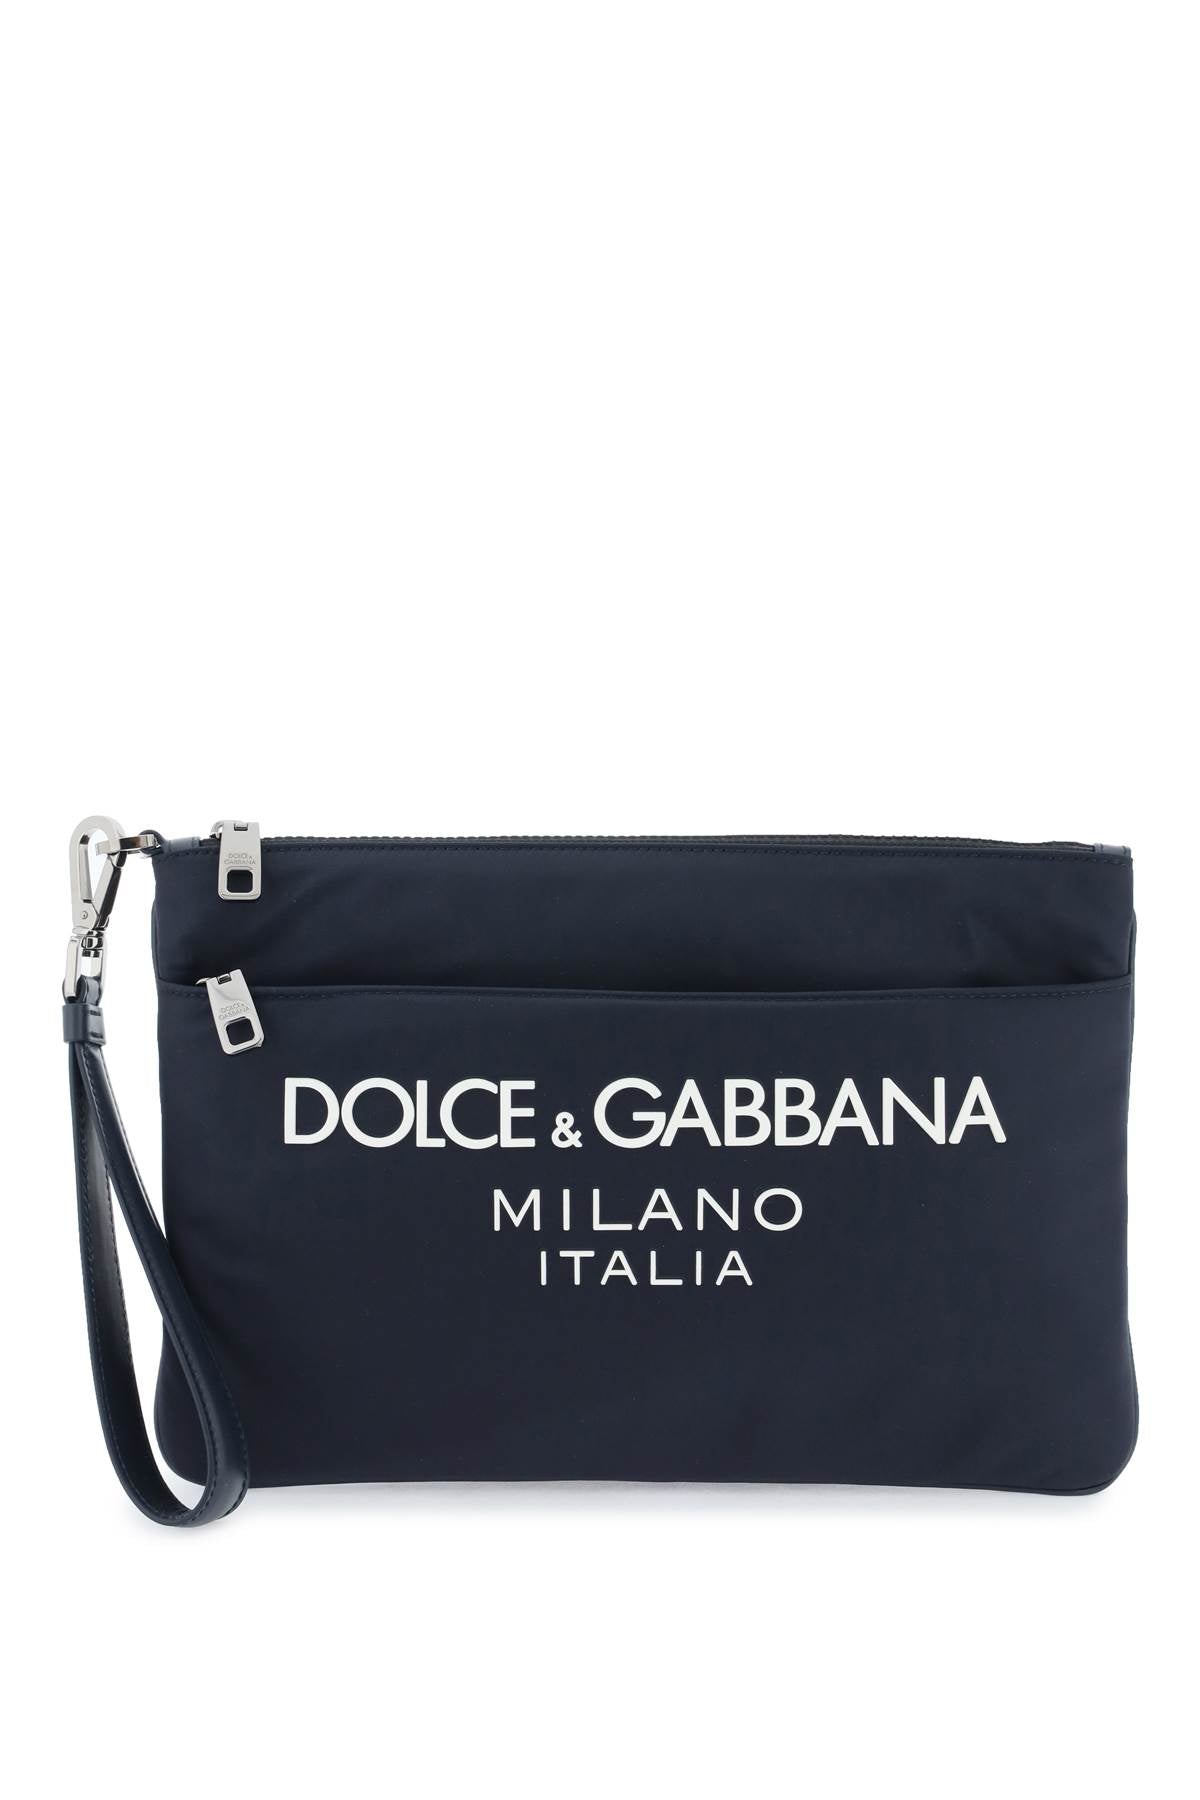 Dolce & Gabbana Dolce & gabbana nylon pouch with rubberized logo